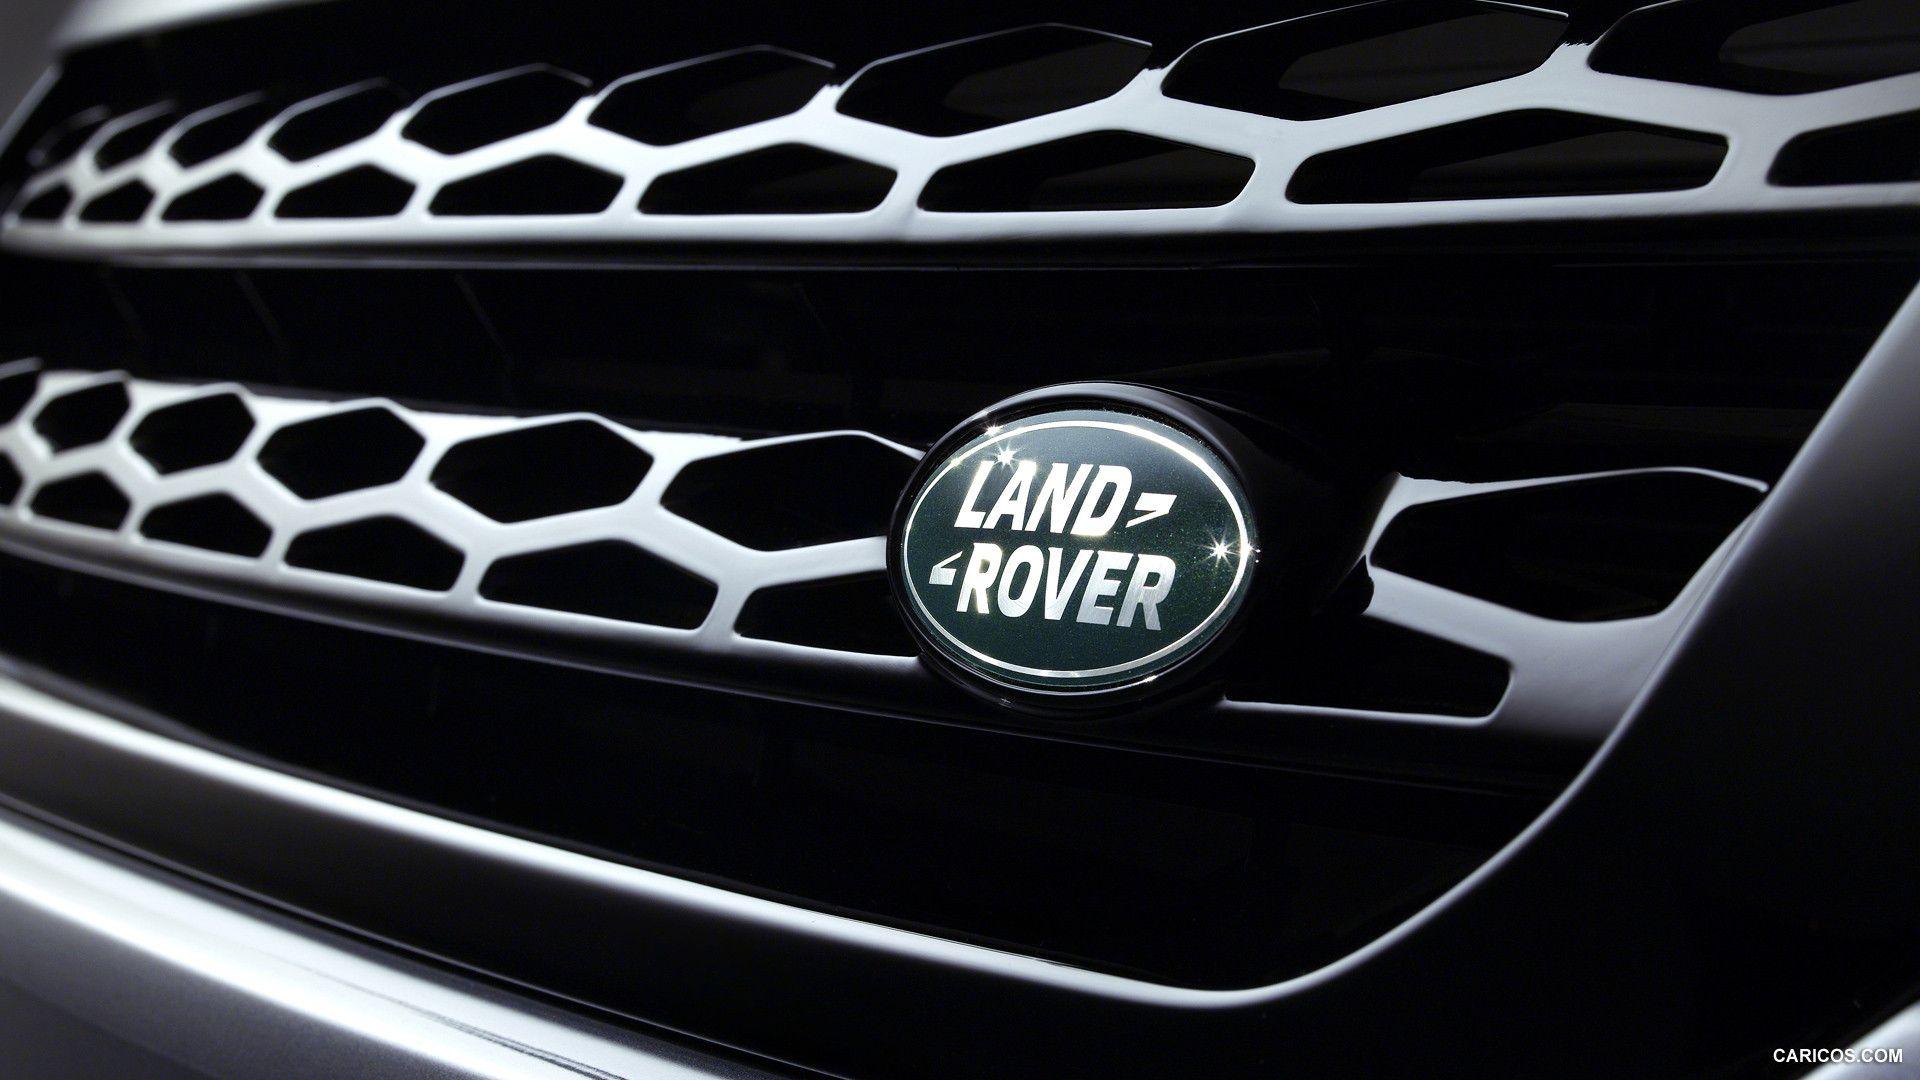 Land Rover Logo Cars For Wallpaper. Land rover